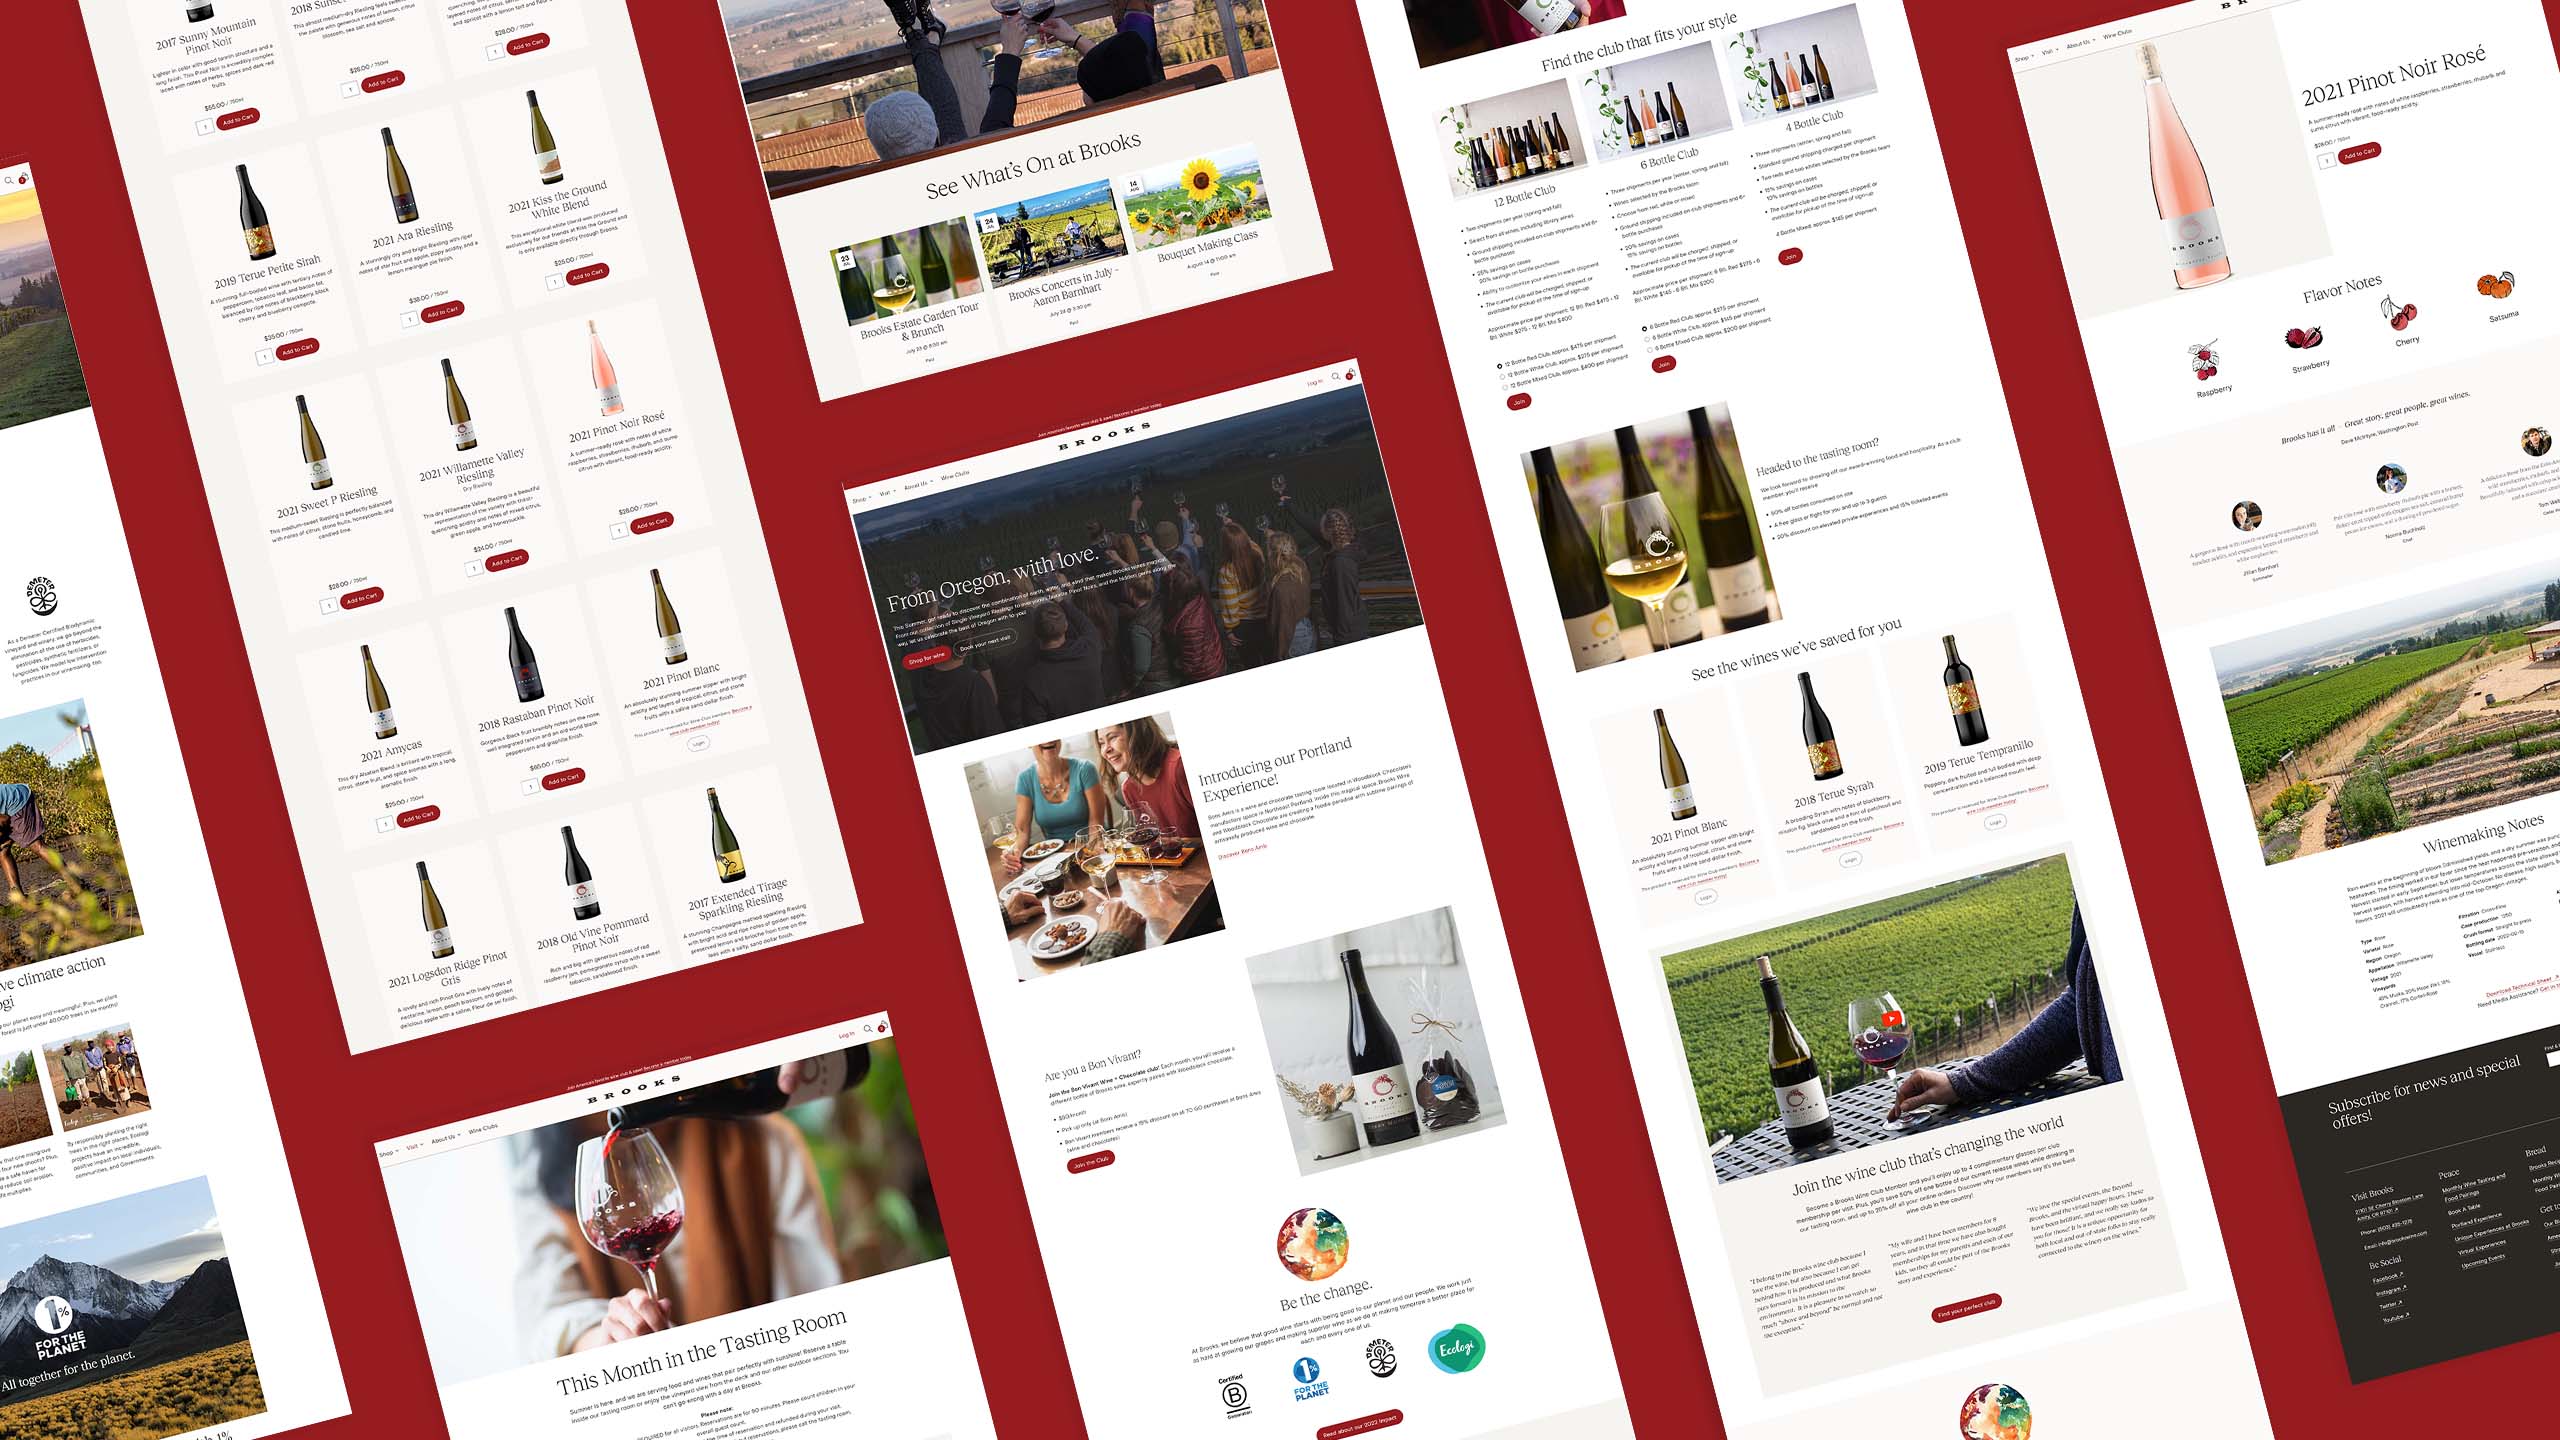 panel of 7 screenshots from Brooks Wine Website